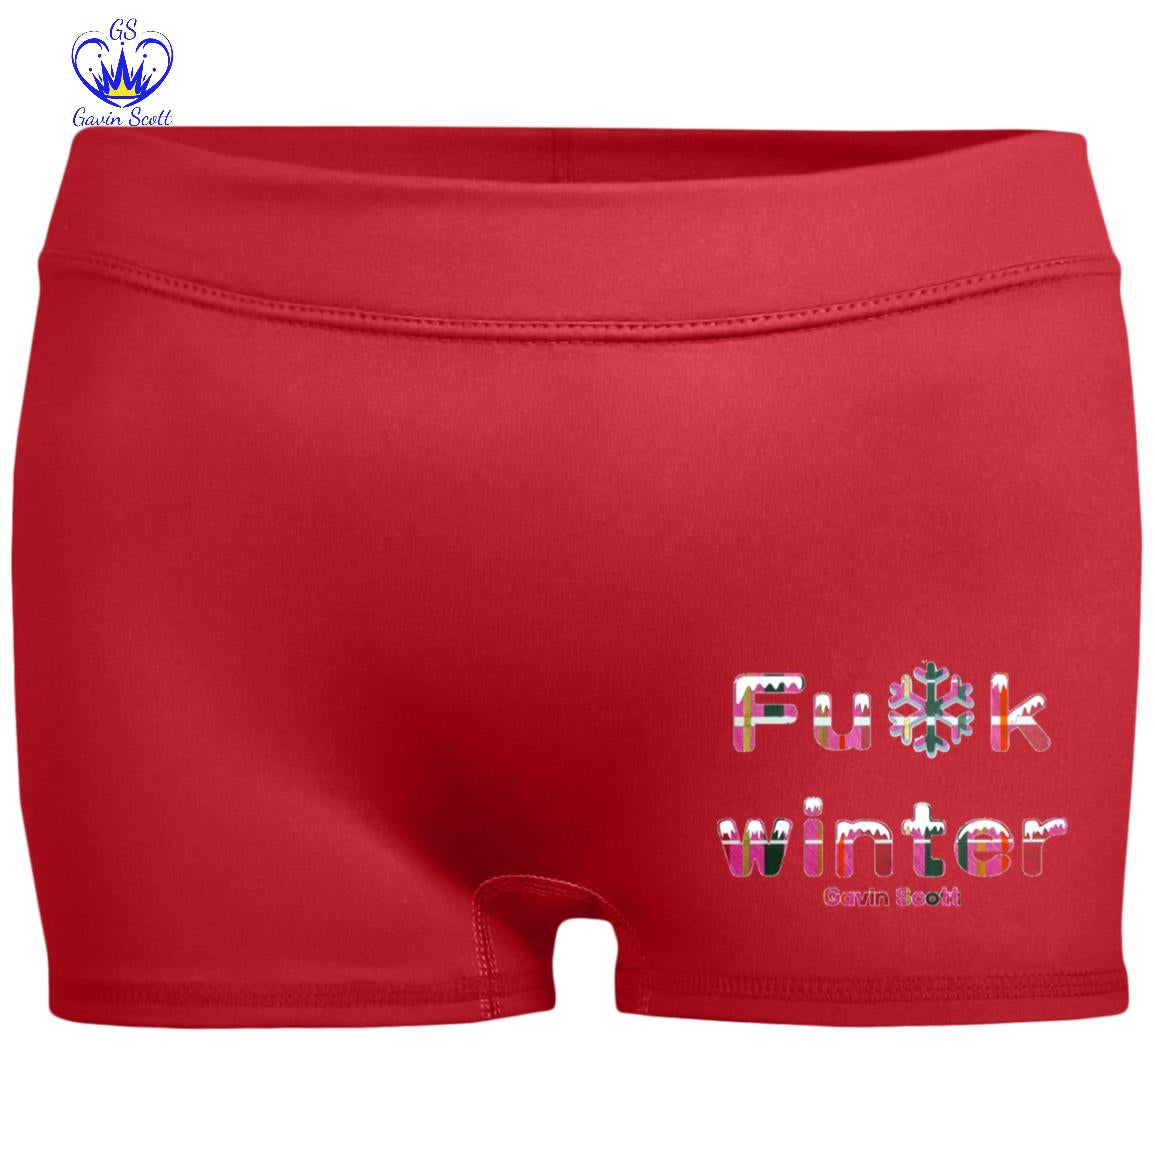 Gavin Scott Censored FU*K WINTER Fitted Moisture-Wicking 2.5 inch Inseam Shorts (Femme XS-2XL)